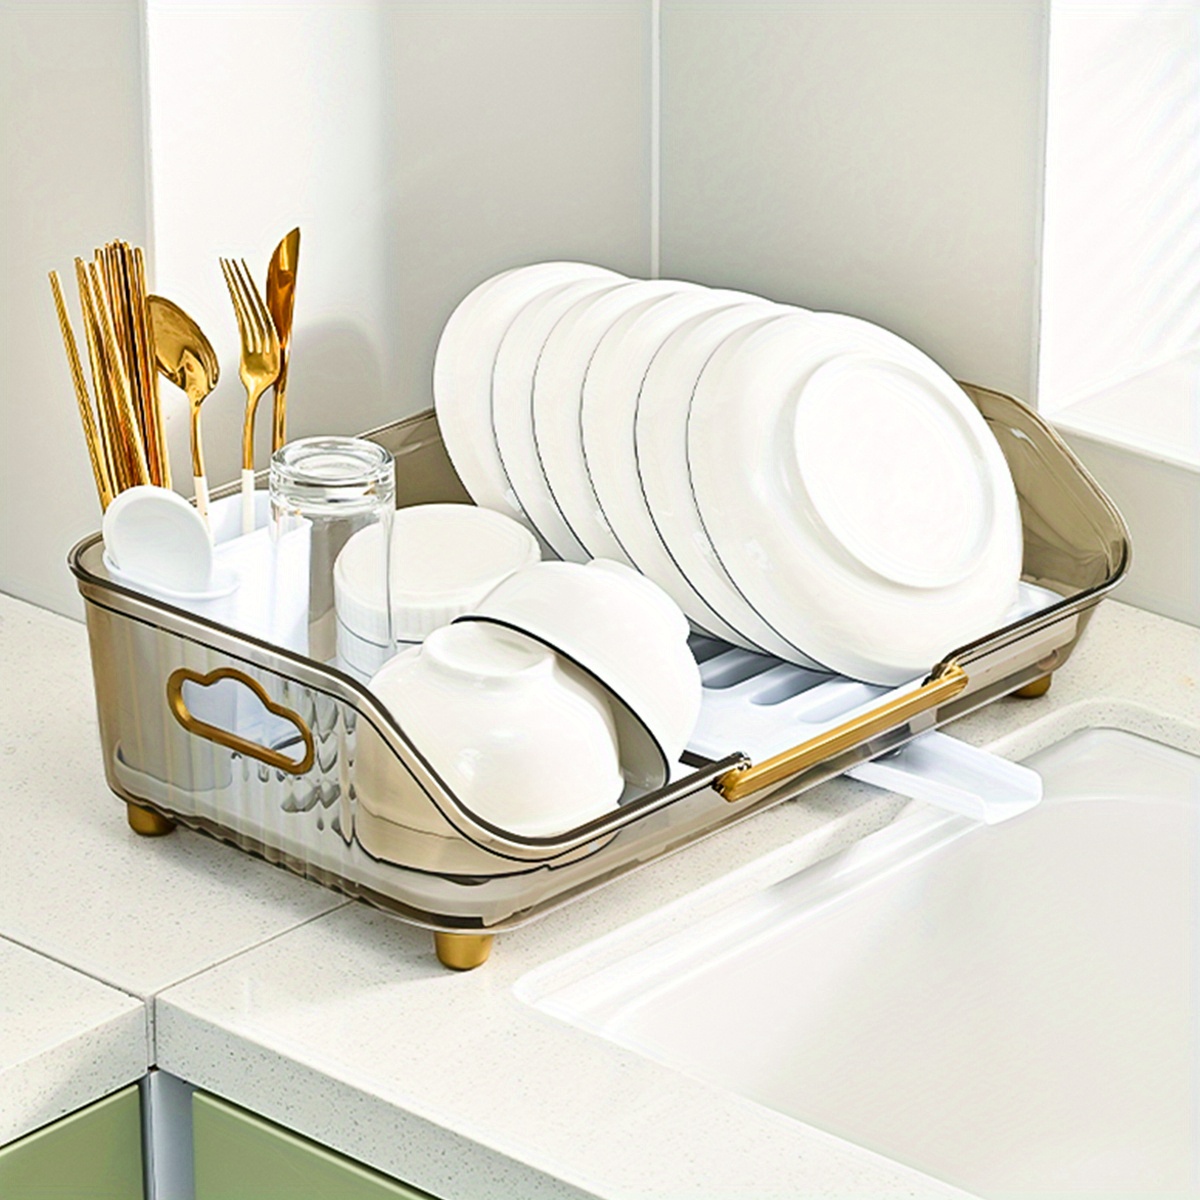 Stainless Drying Dish Rack Drain Board Set Utensil Holder Metal Kitchen  Counter